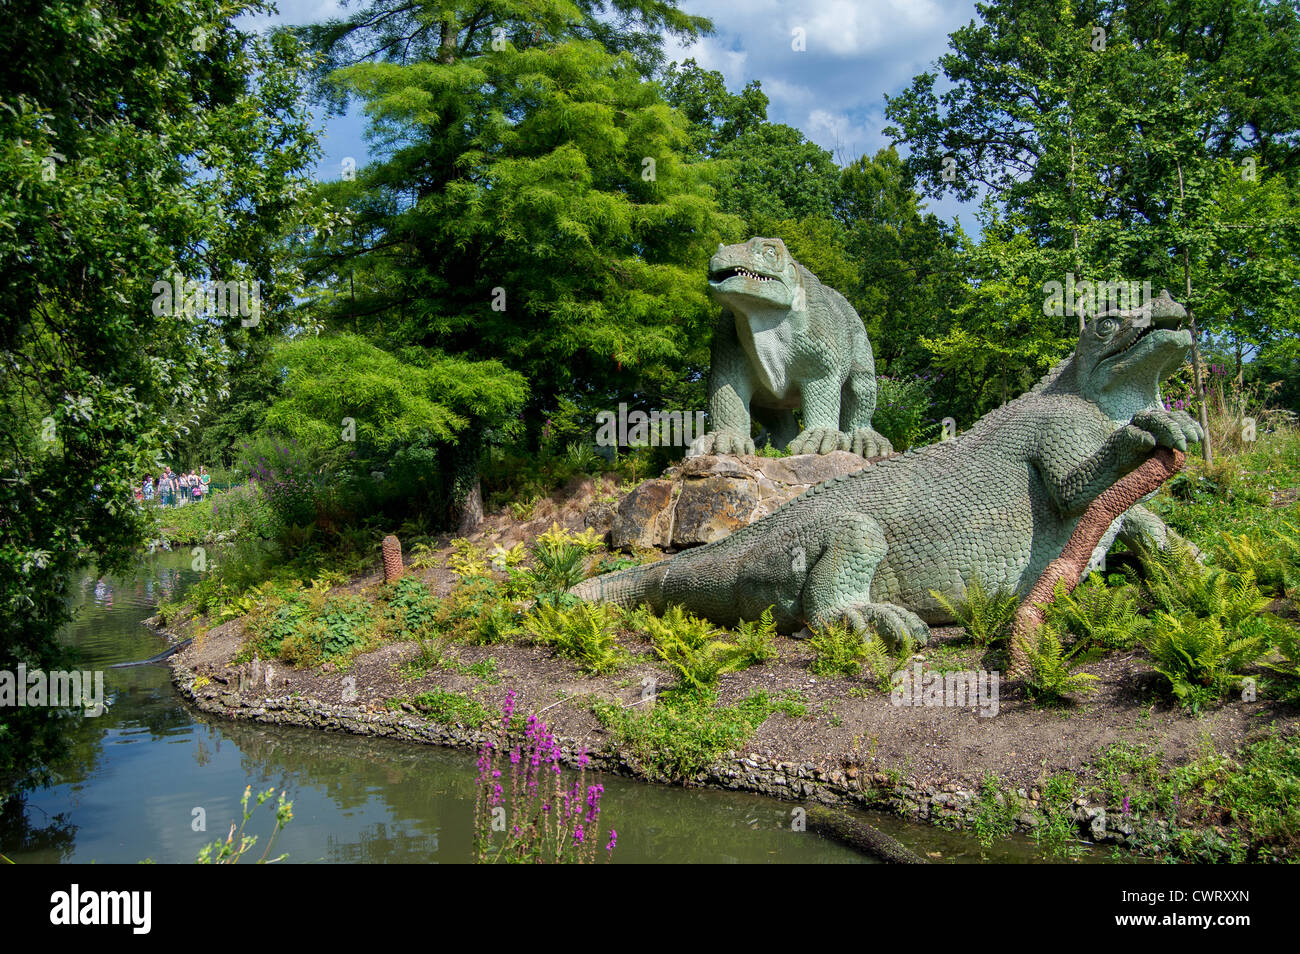 Iguanodons – Crystal Palace Park dinosaurs by sculptor Benjamin Waterhouse Hawkins Stock Photo